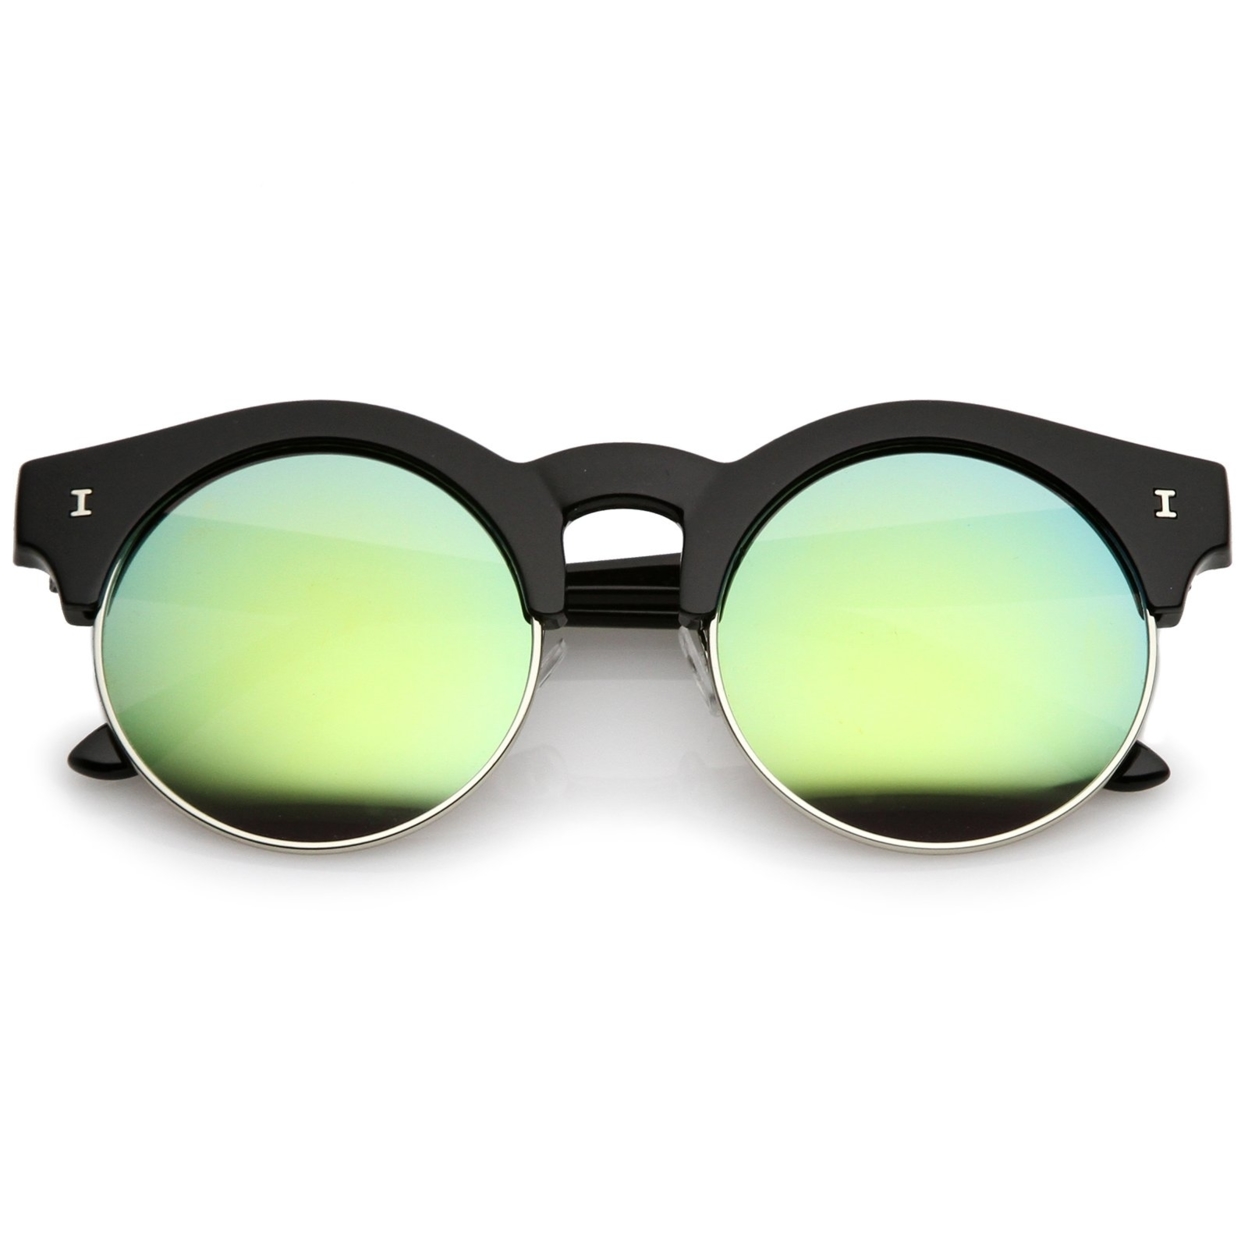 Modern Metal Trim Colored Mirror Round Flat Lens Half Frame Sunglasses 51mm - Black-Silver / Green Mirror